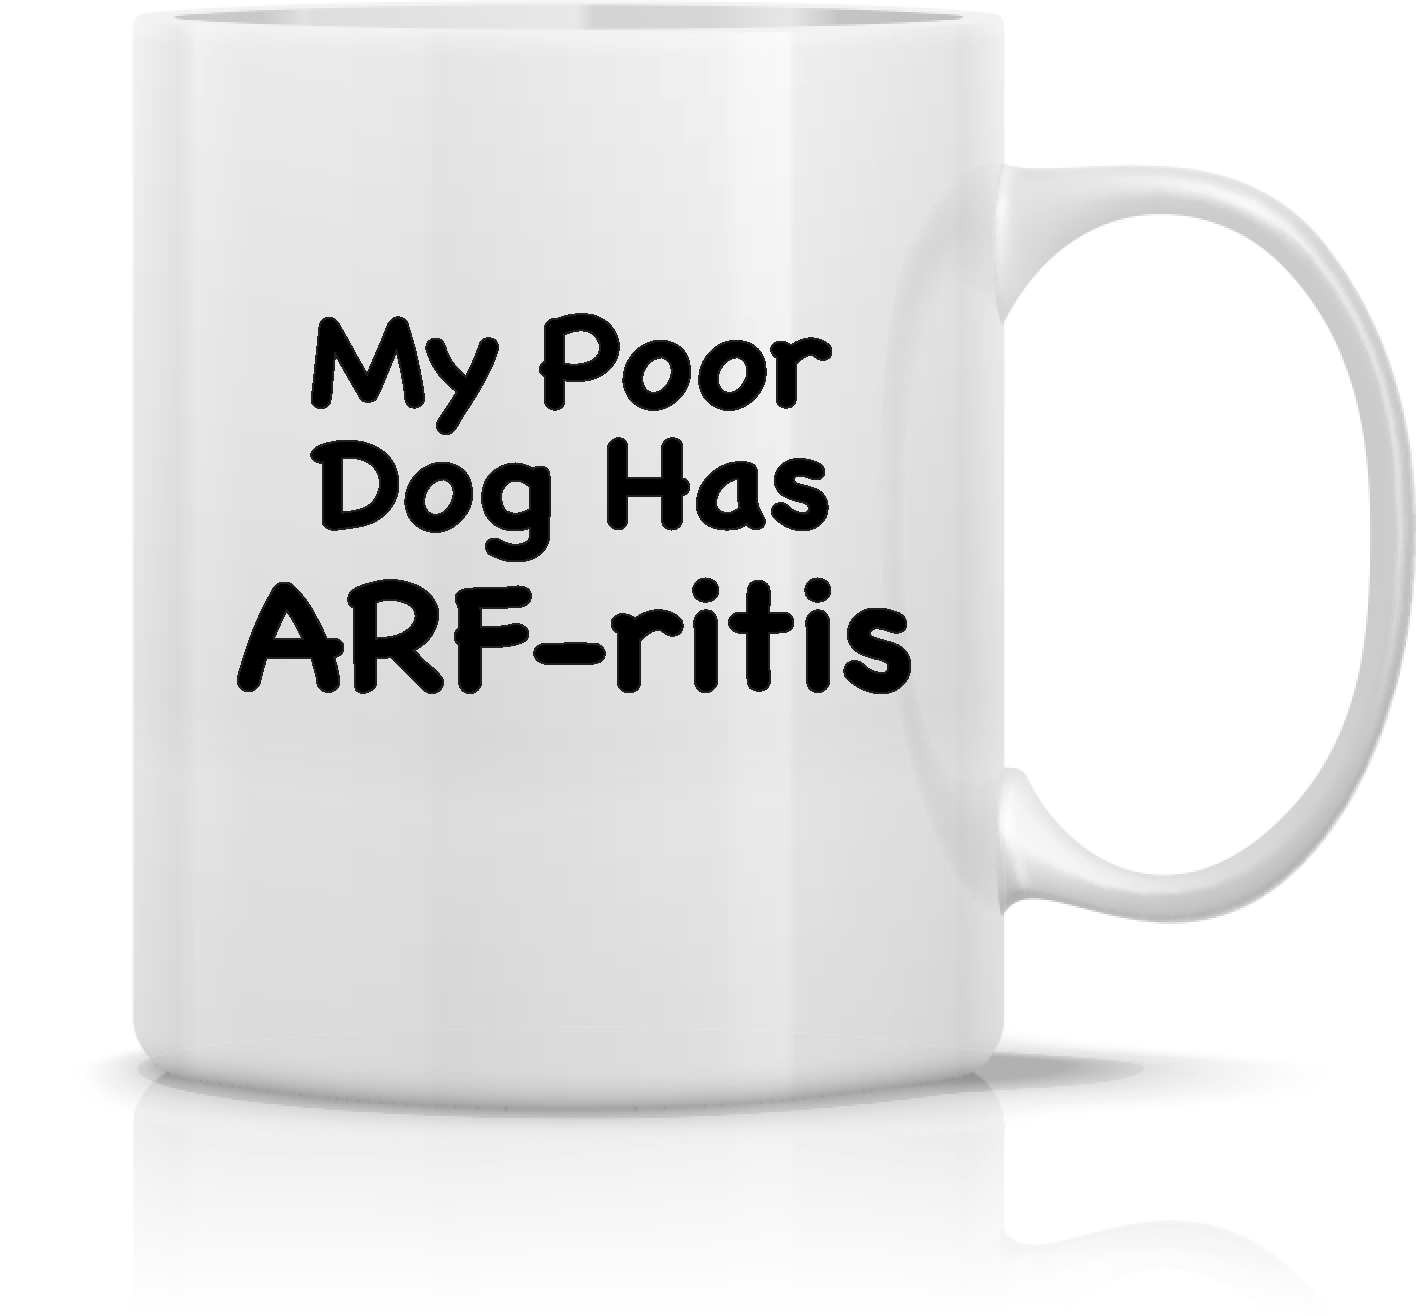 "My Poor Dog Has ARF-ritis" 15oz Ceramic Coffee Cup